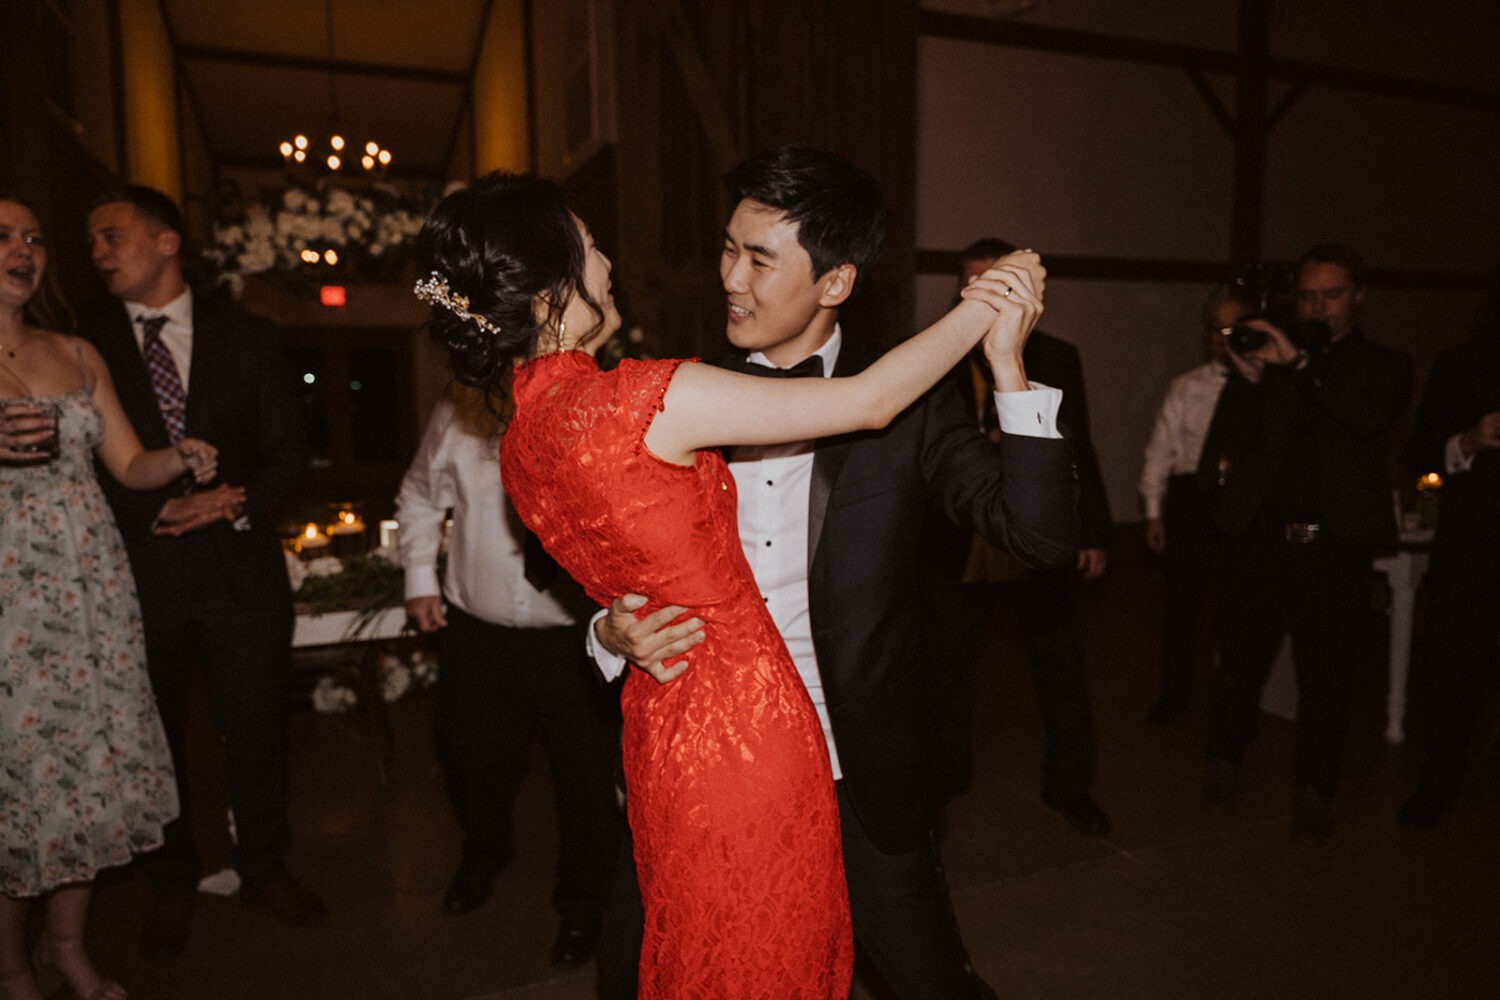 couple dances together on dance floor at wedding reception